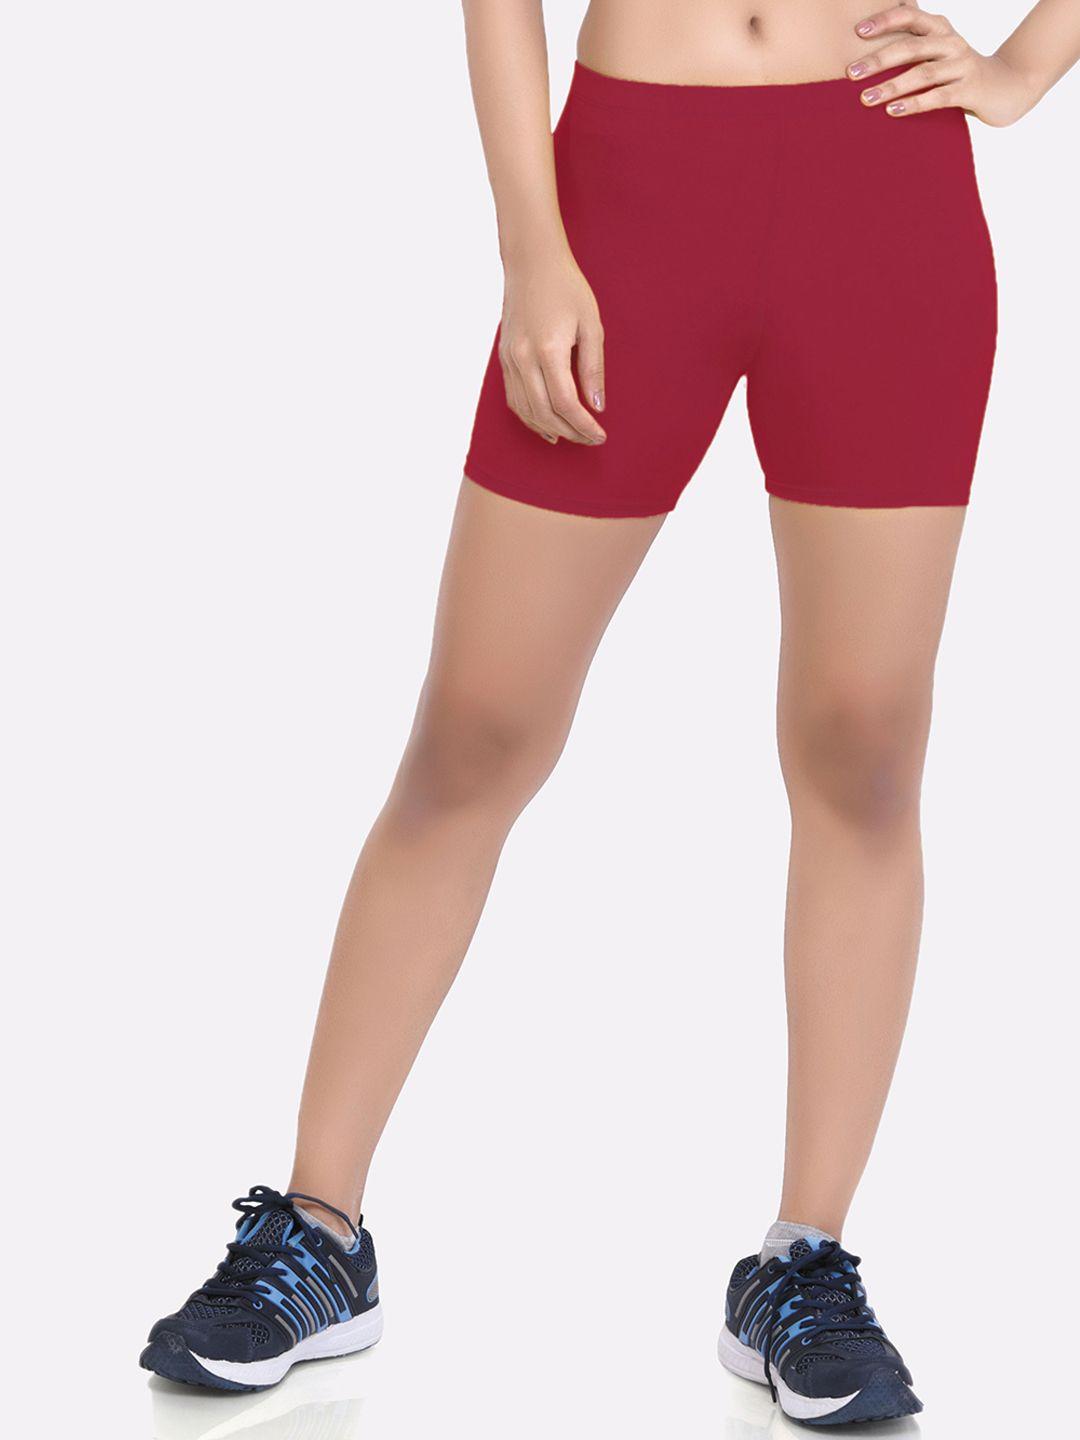 laasa sports women maroon skinny fit training or gym sports shorts